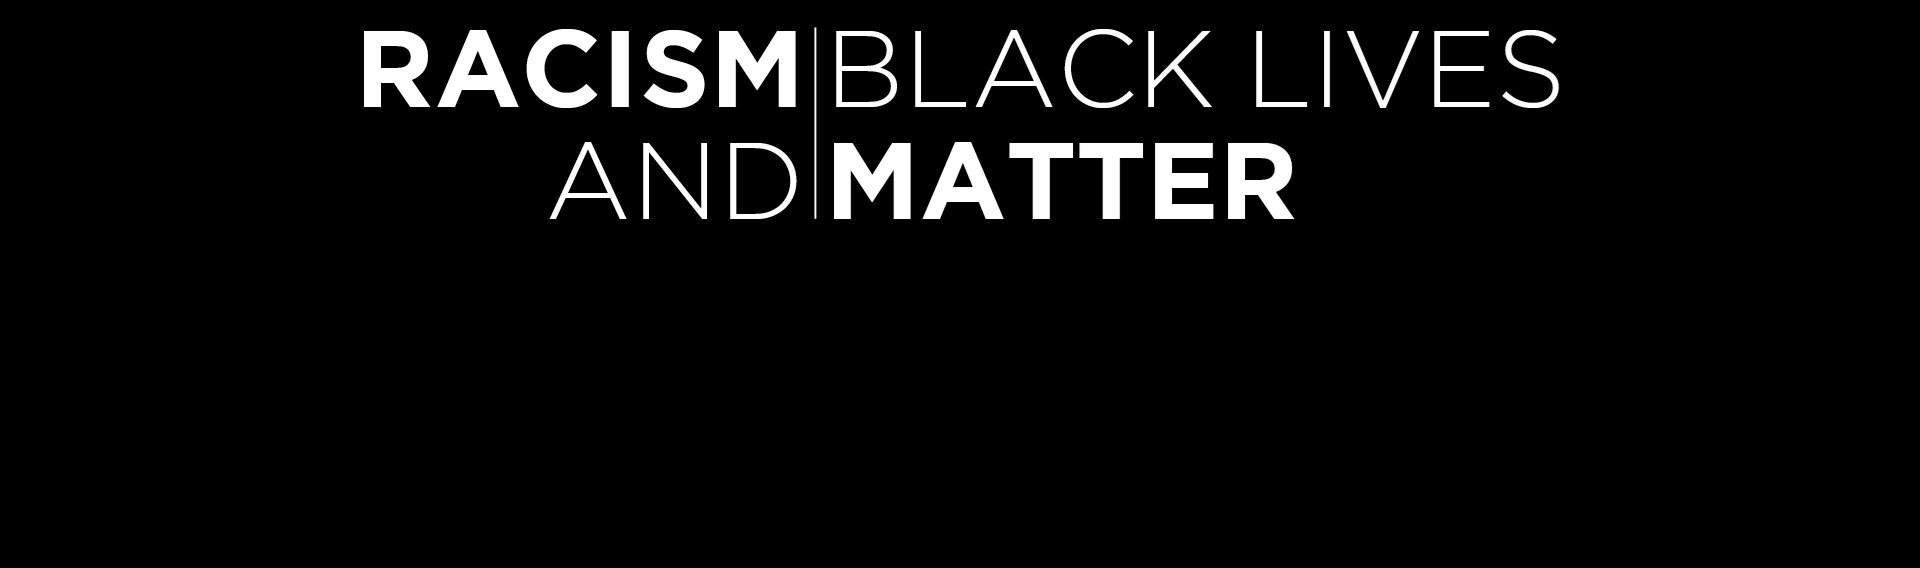 Racism and Black Lives Matter